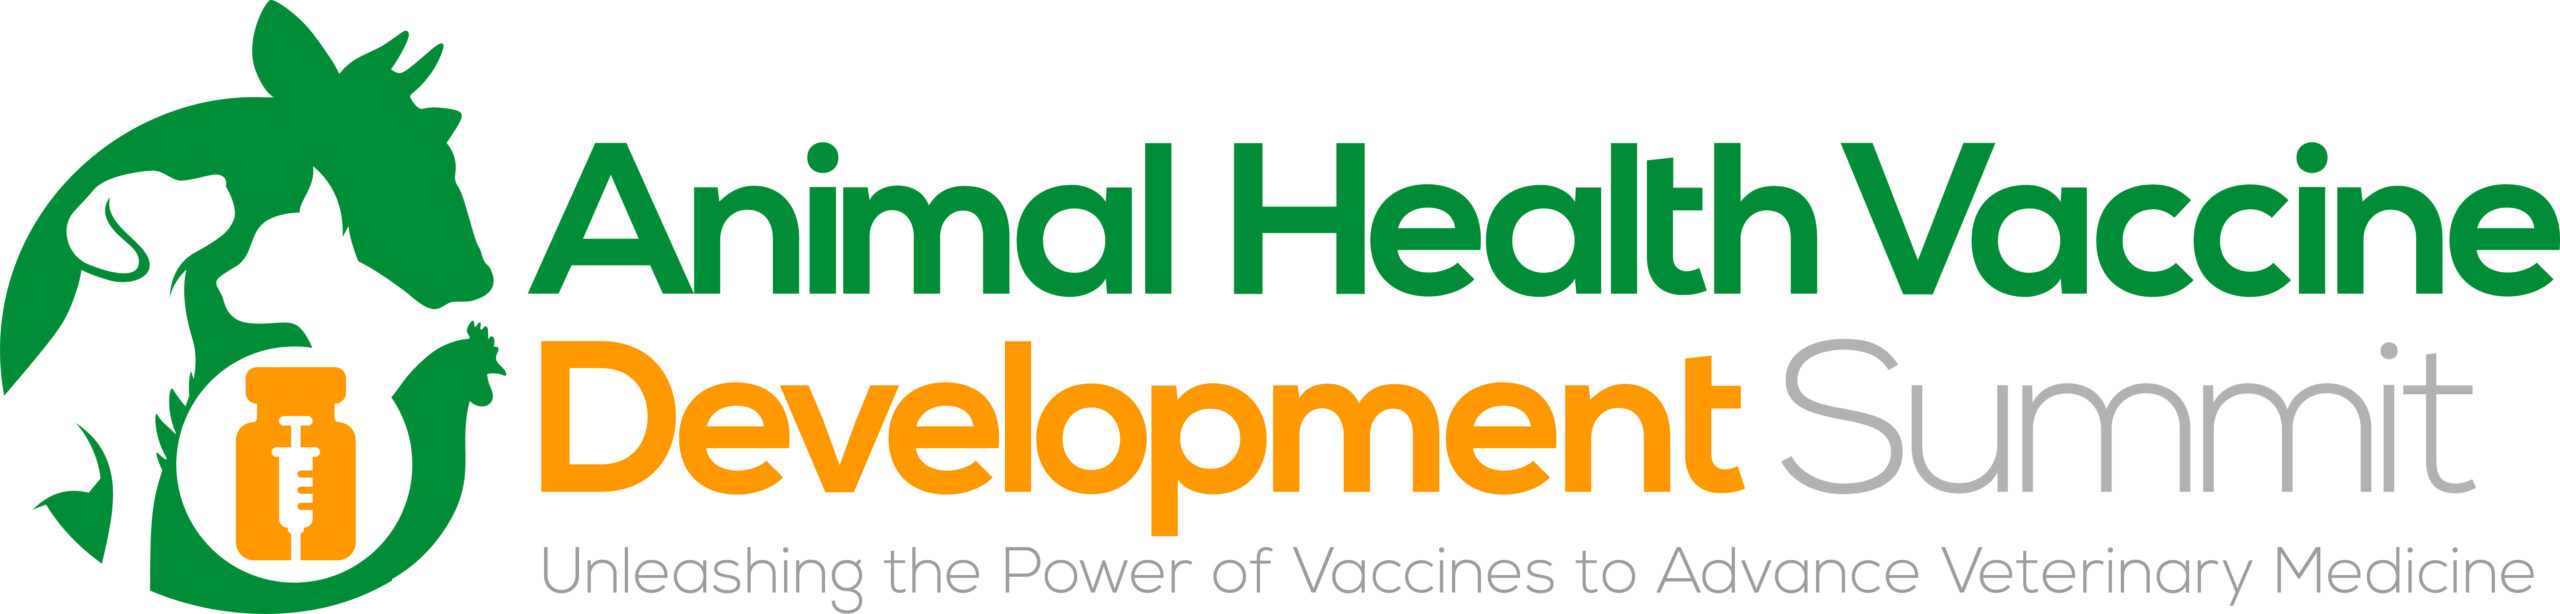 HW230812 49177 Animal Health Vaccine Development Summit logo FINAL